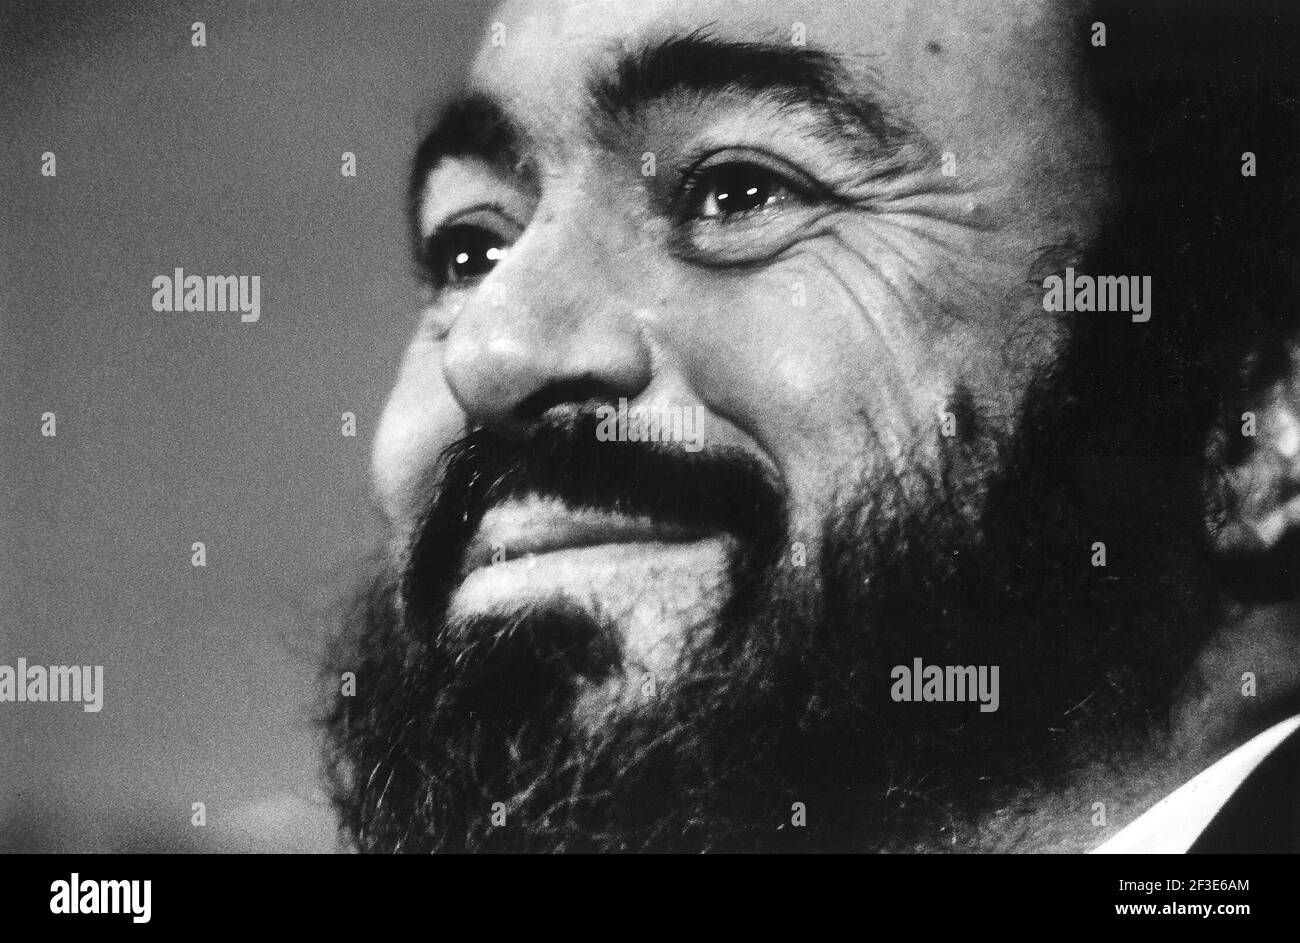 Luciano Pavarotti opera singer Stock Photo - Alamy